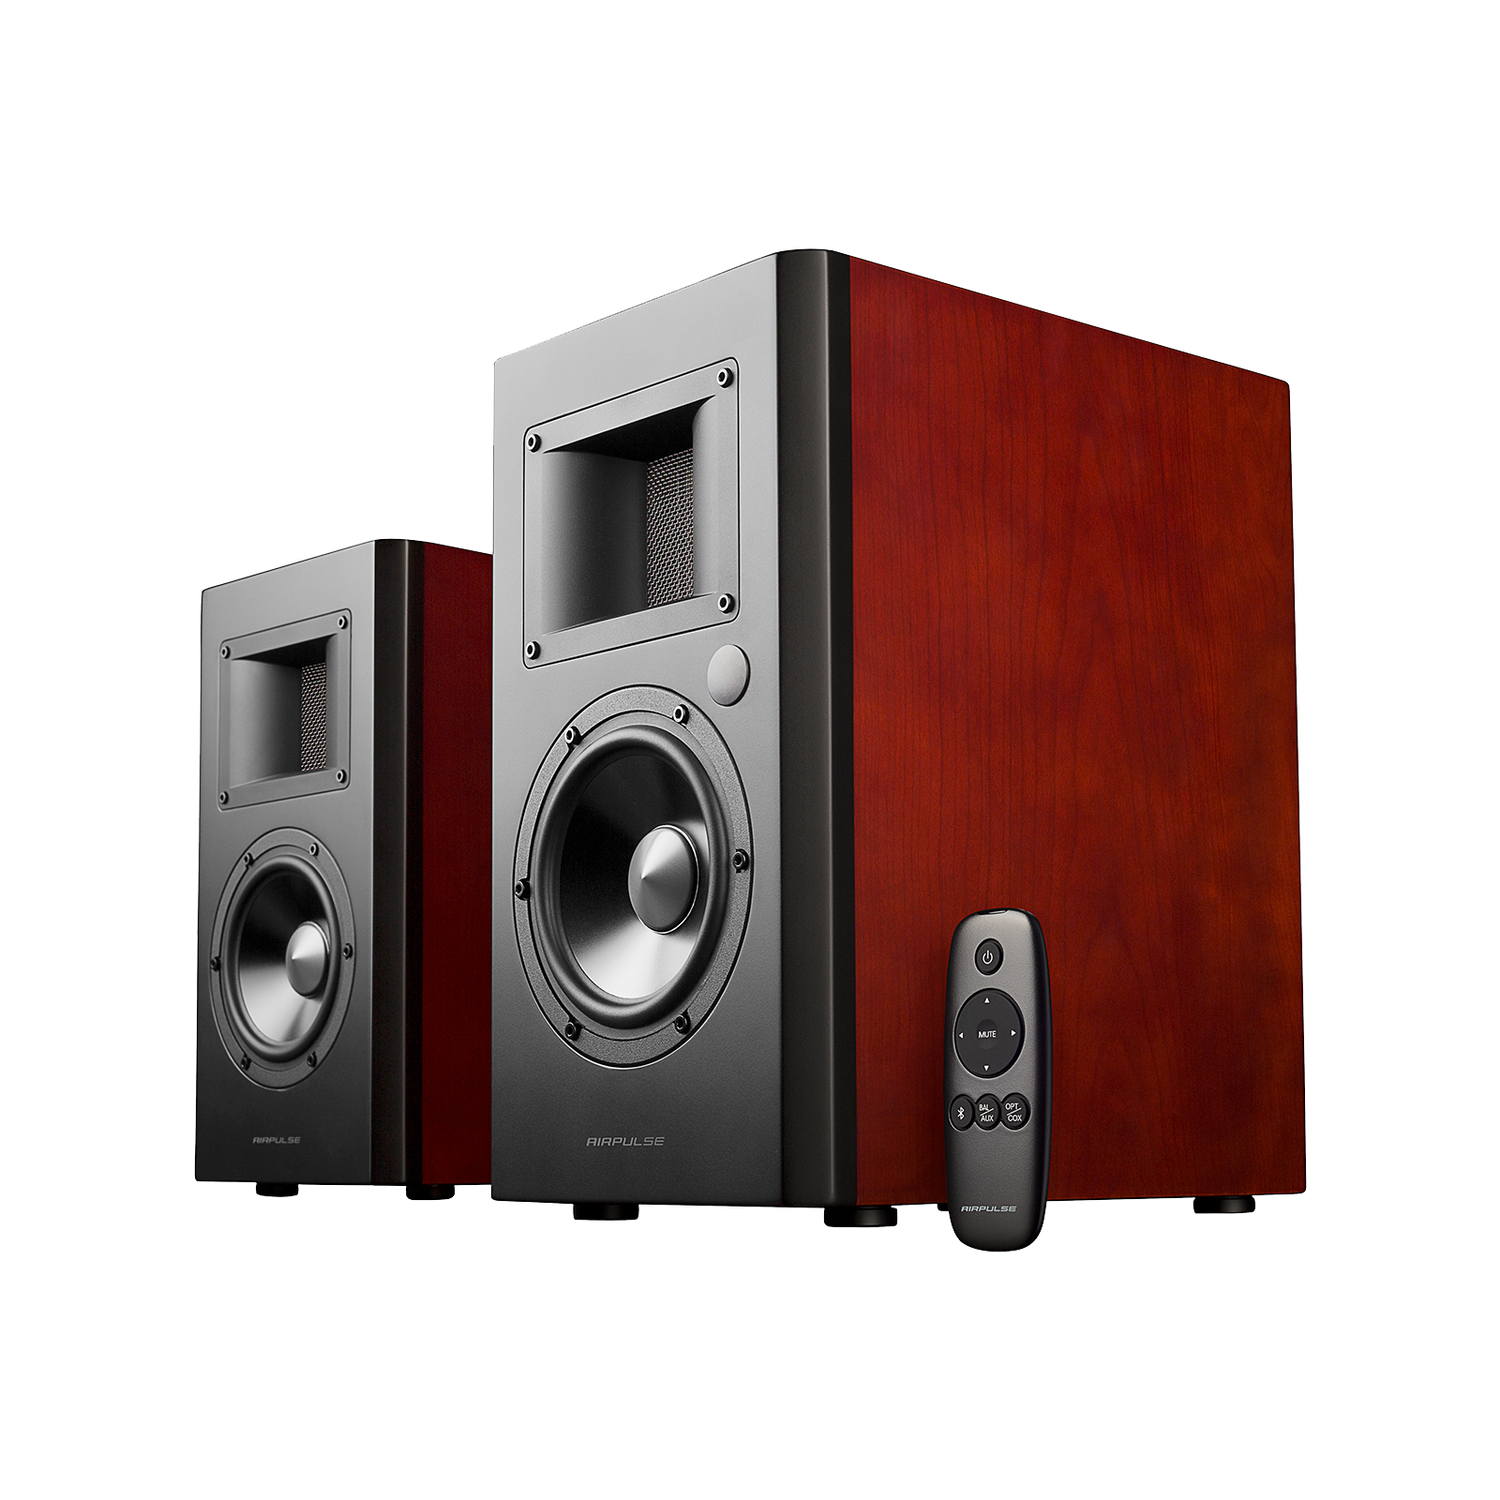 Airpulse A200 Studio-quality Speakers